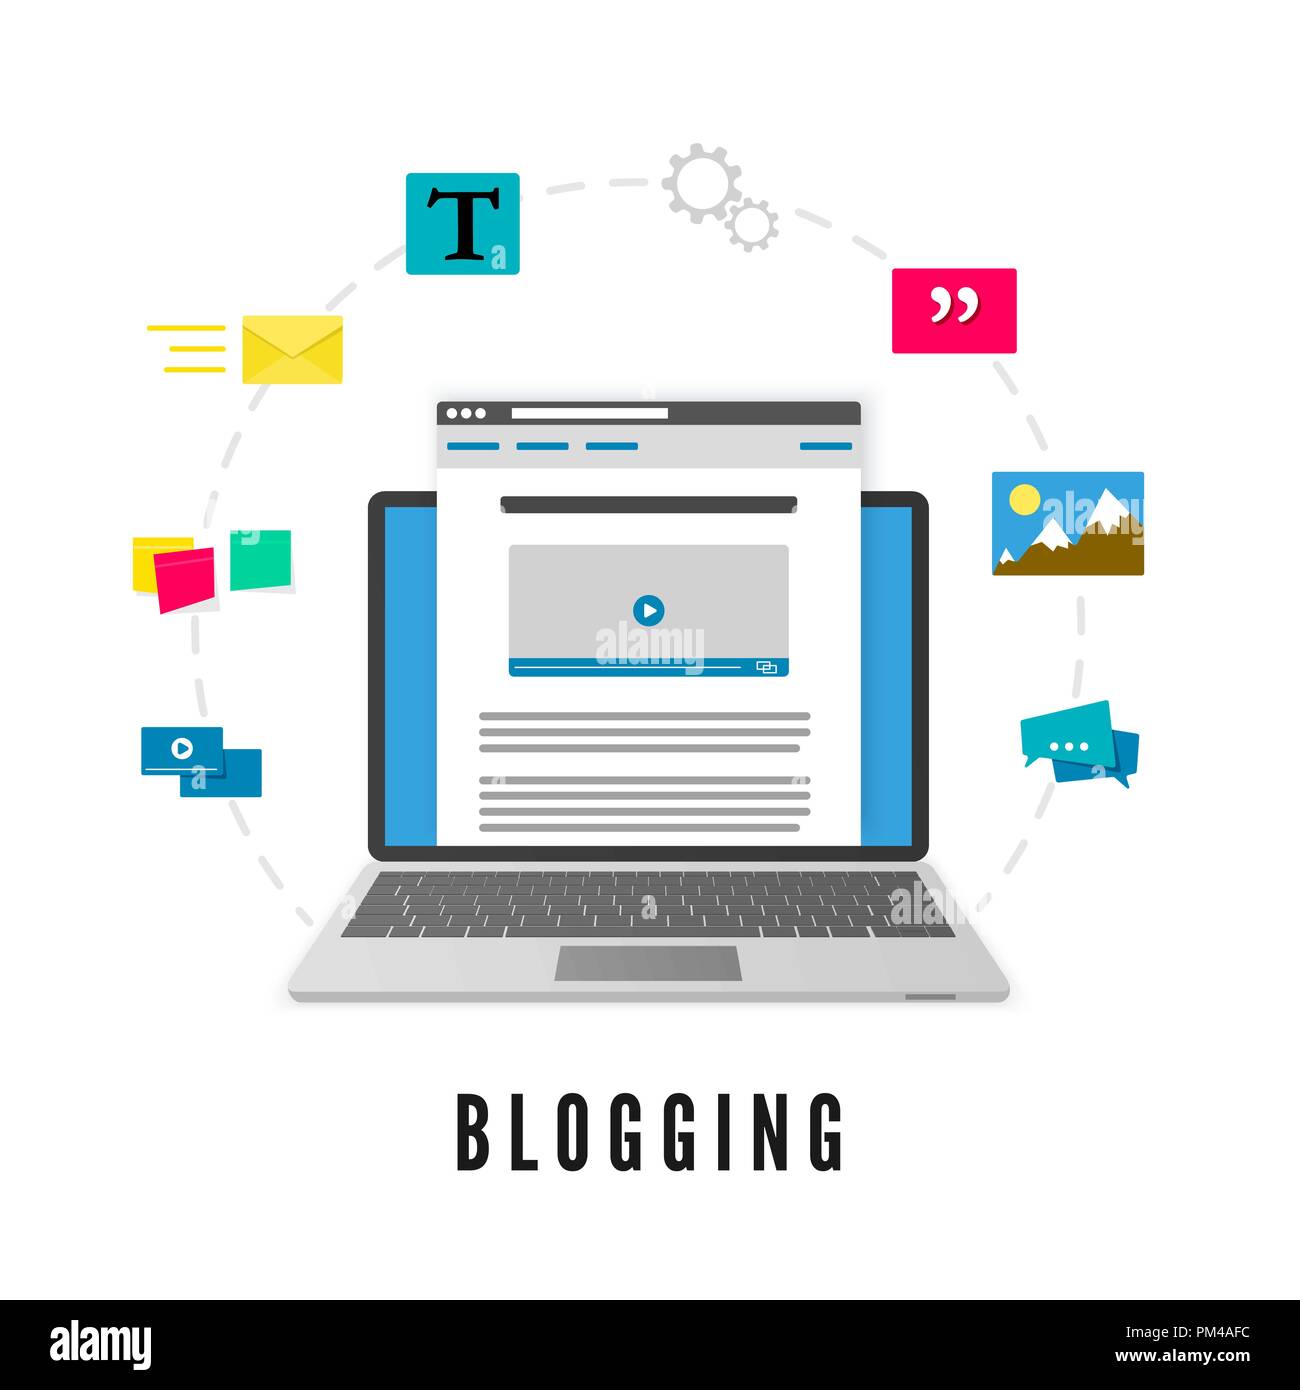 Development and publication blog post. Website development. Blogging concept. Vector illustration isolated on white background Stock Vector